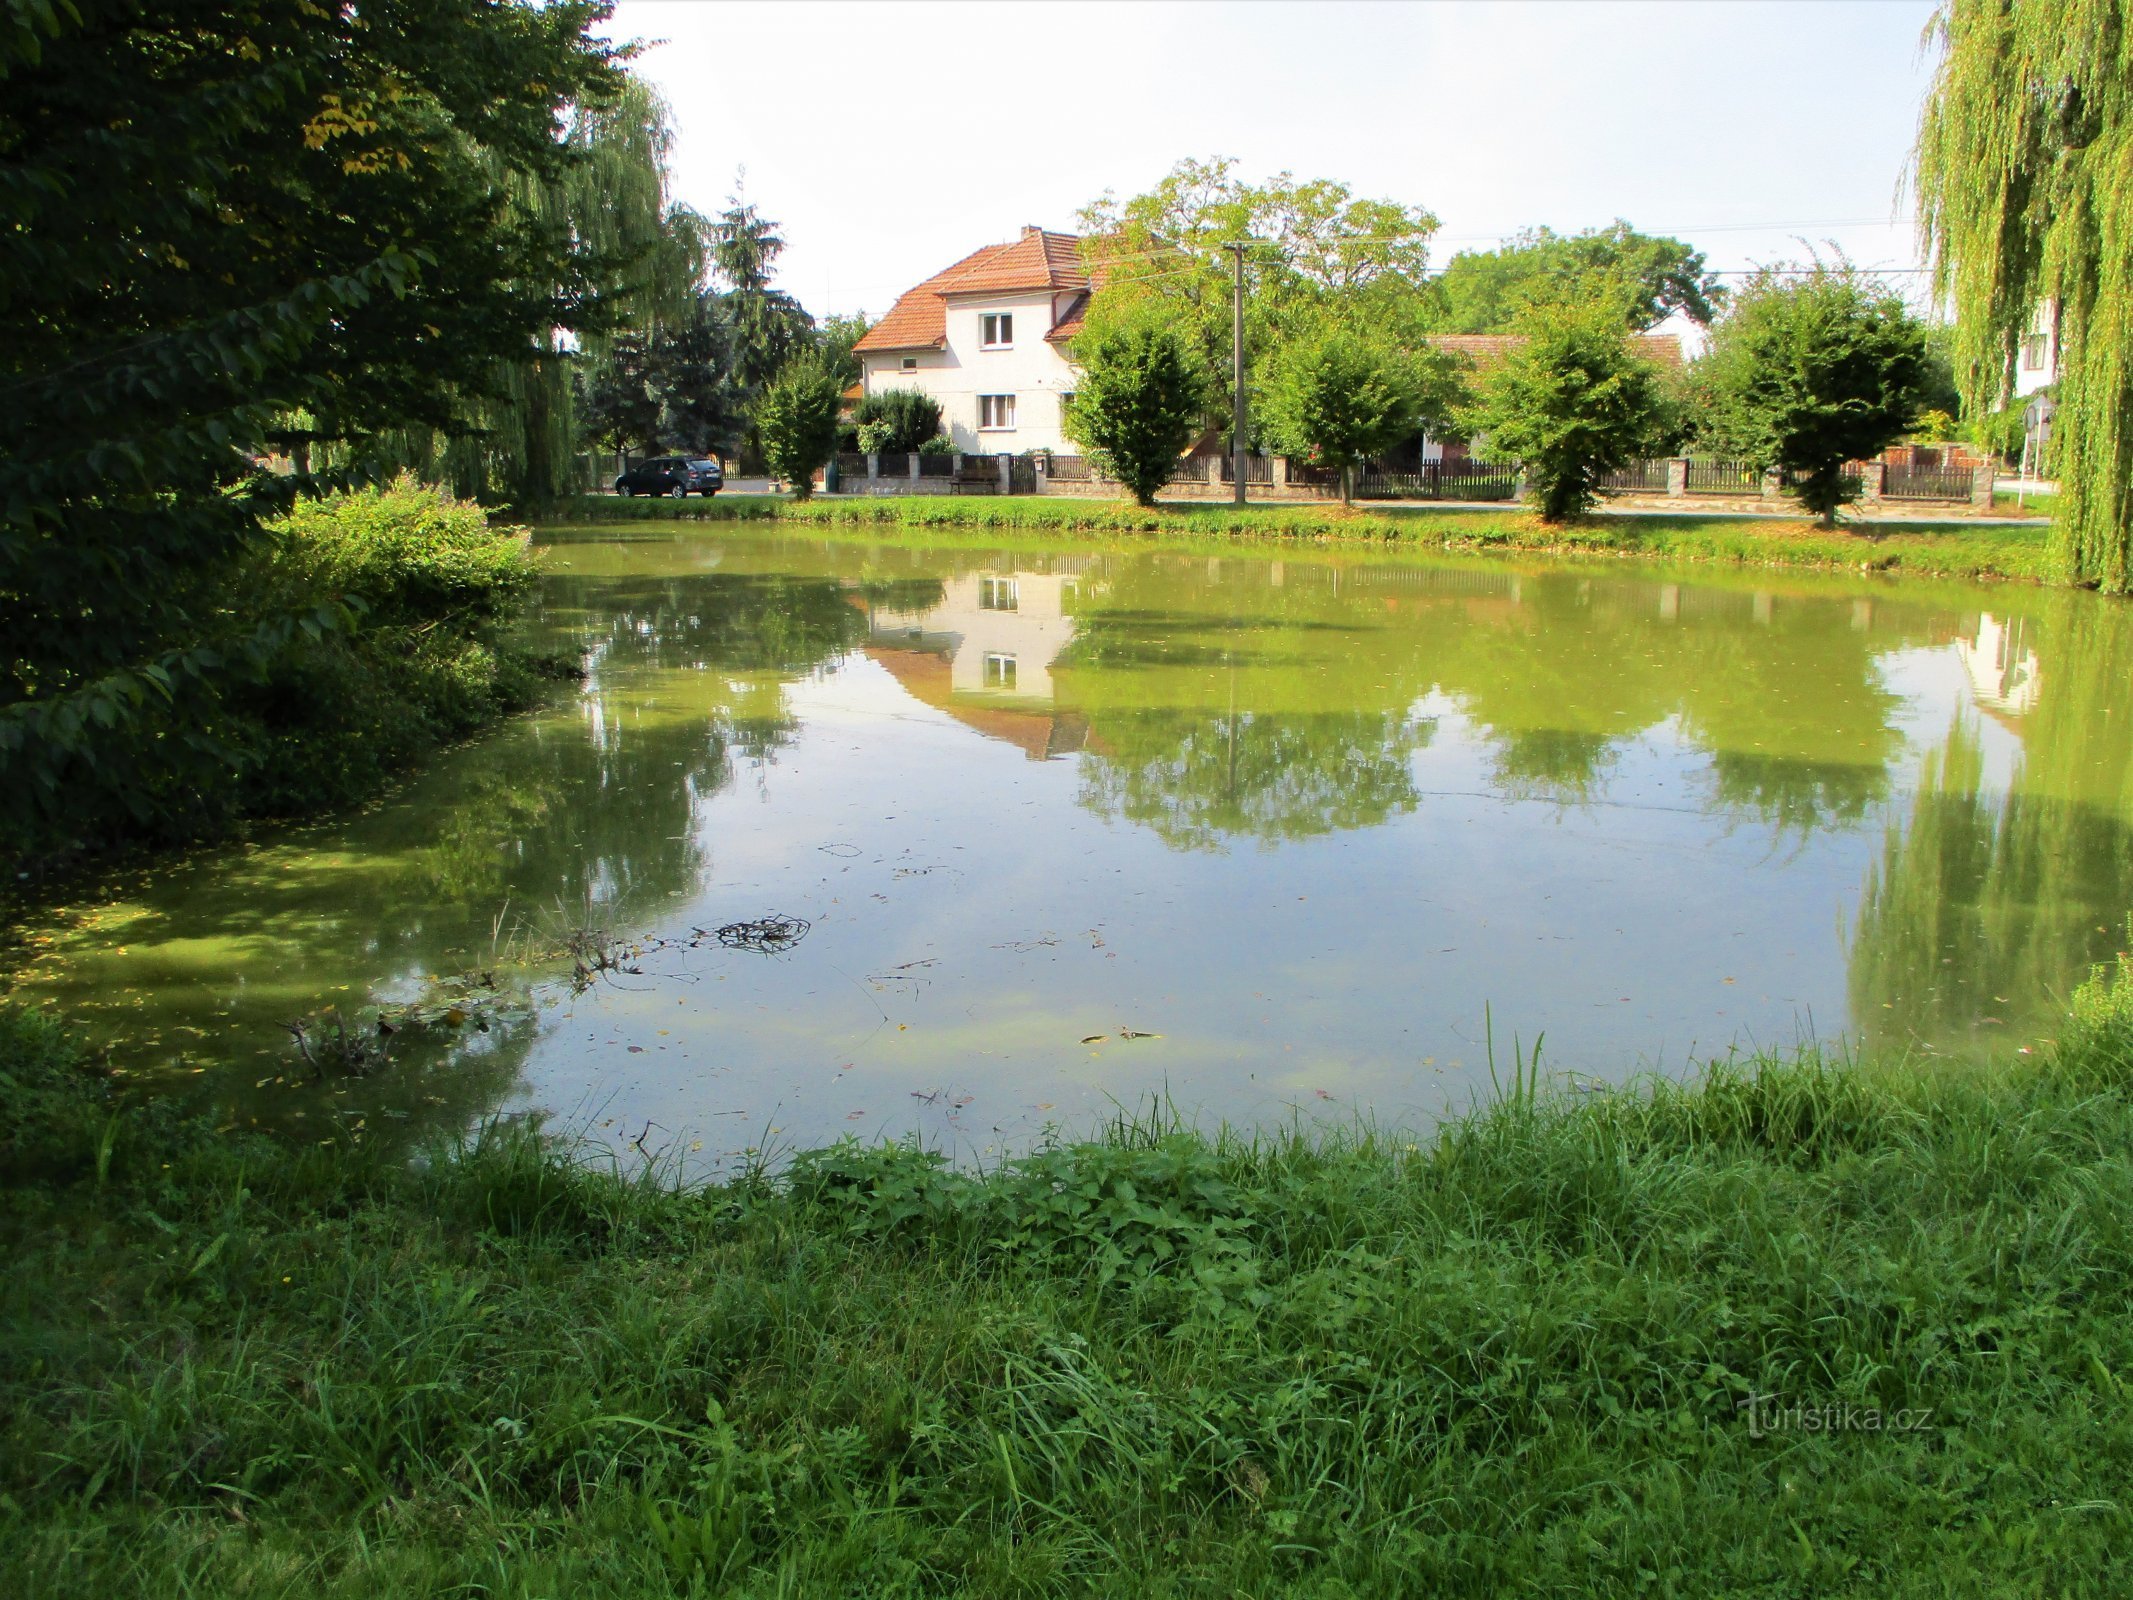 Сільський ставок "Lednice" (Oědovice, 13.9.2020)